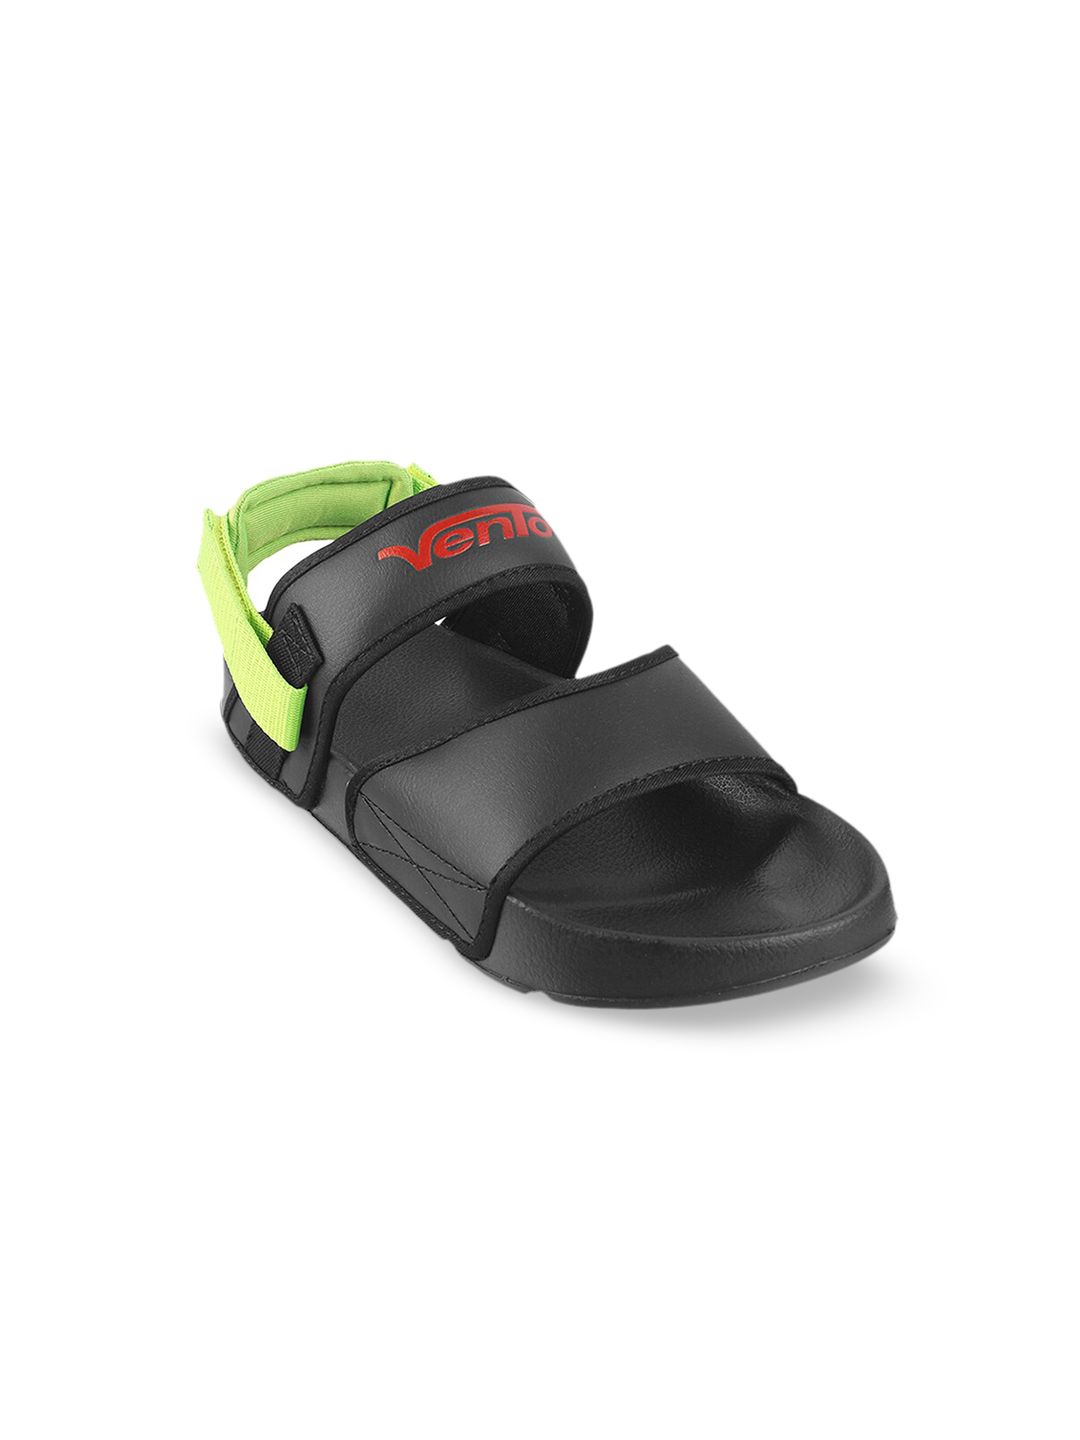 Vento Unisex Black & Green Colourblocked Sports Sandals Price in India